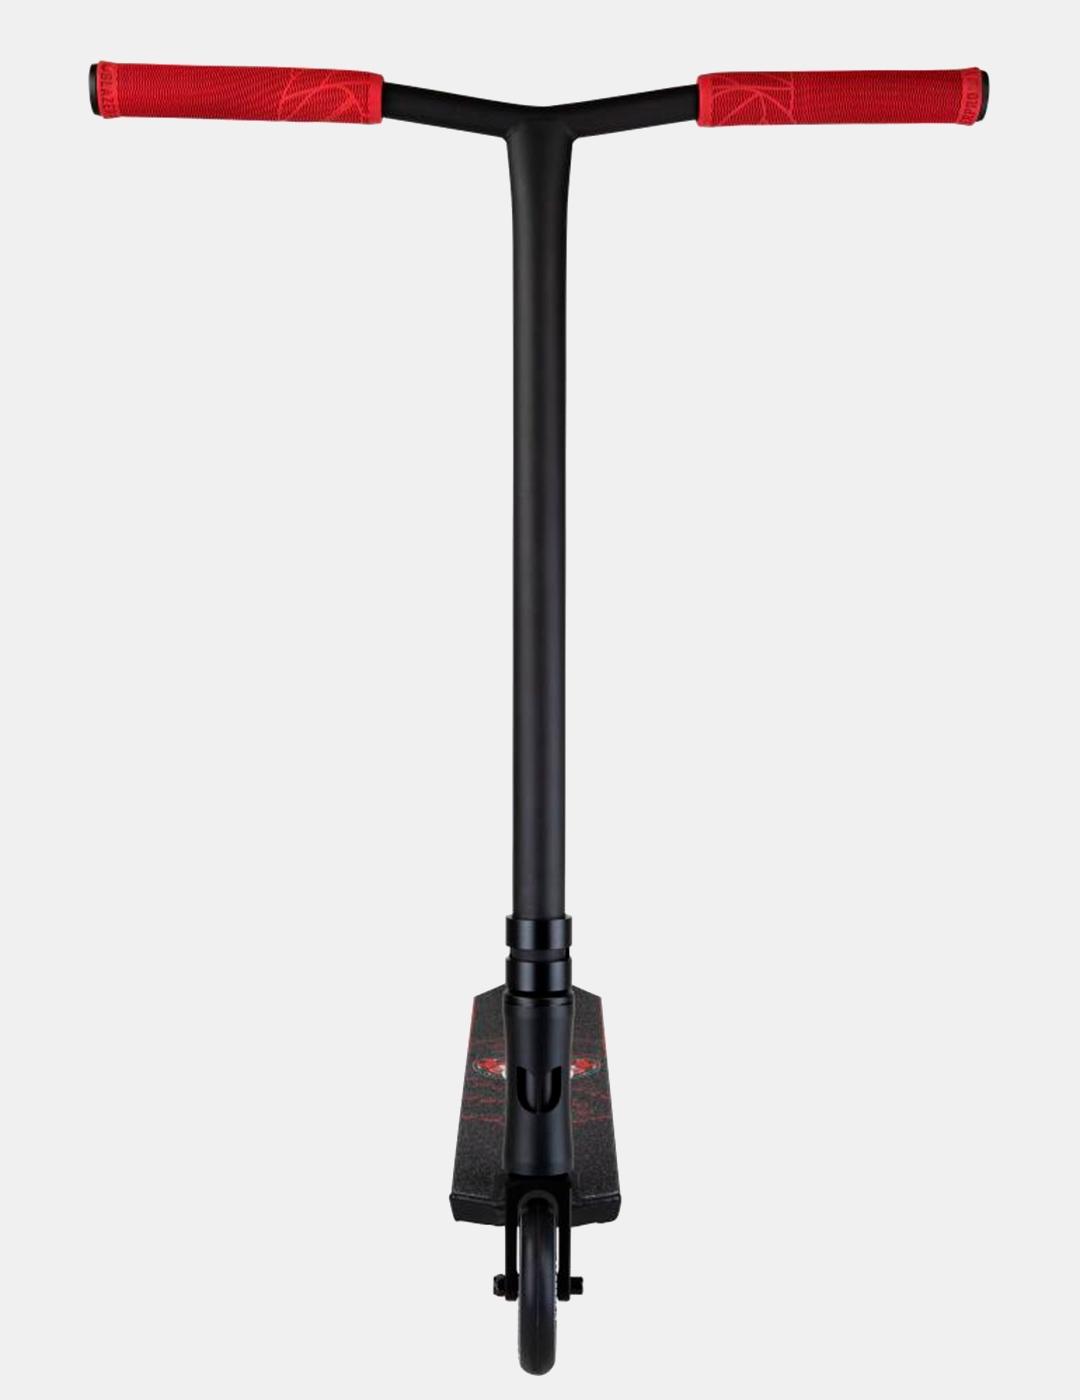 Scooter BLAZER PRO ENIGMA 2 520 MM - Black/Red